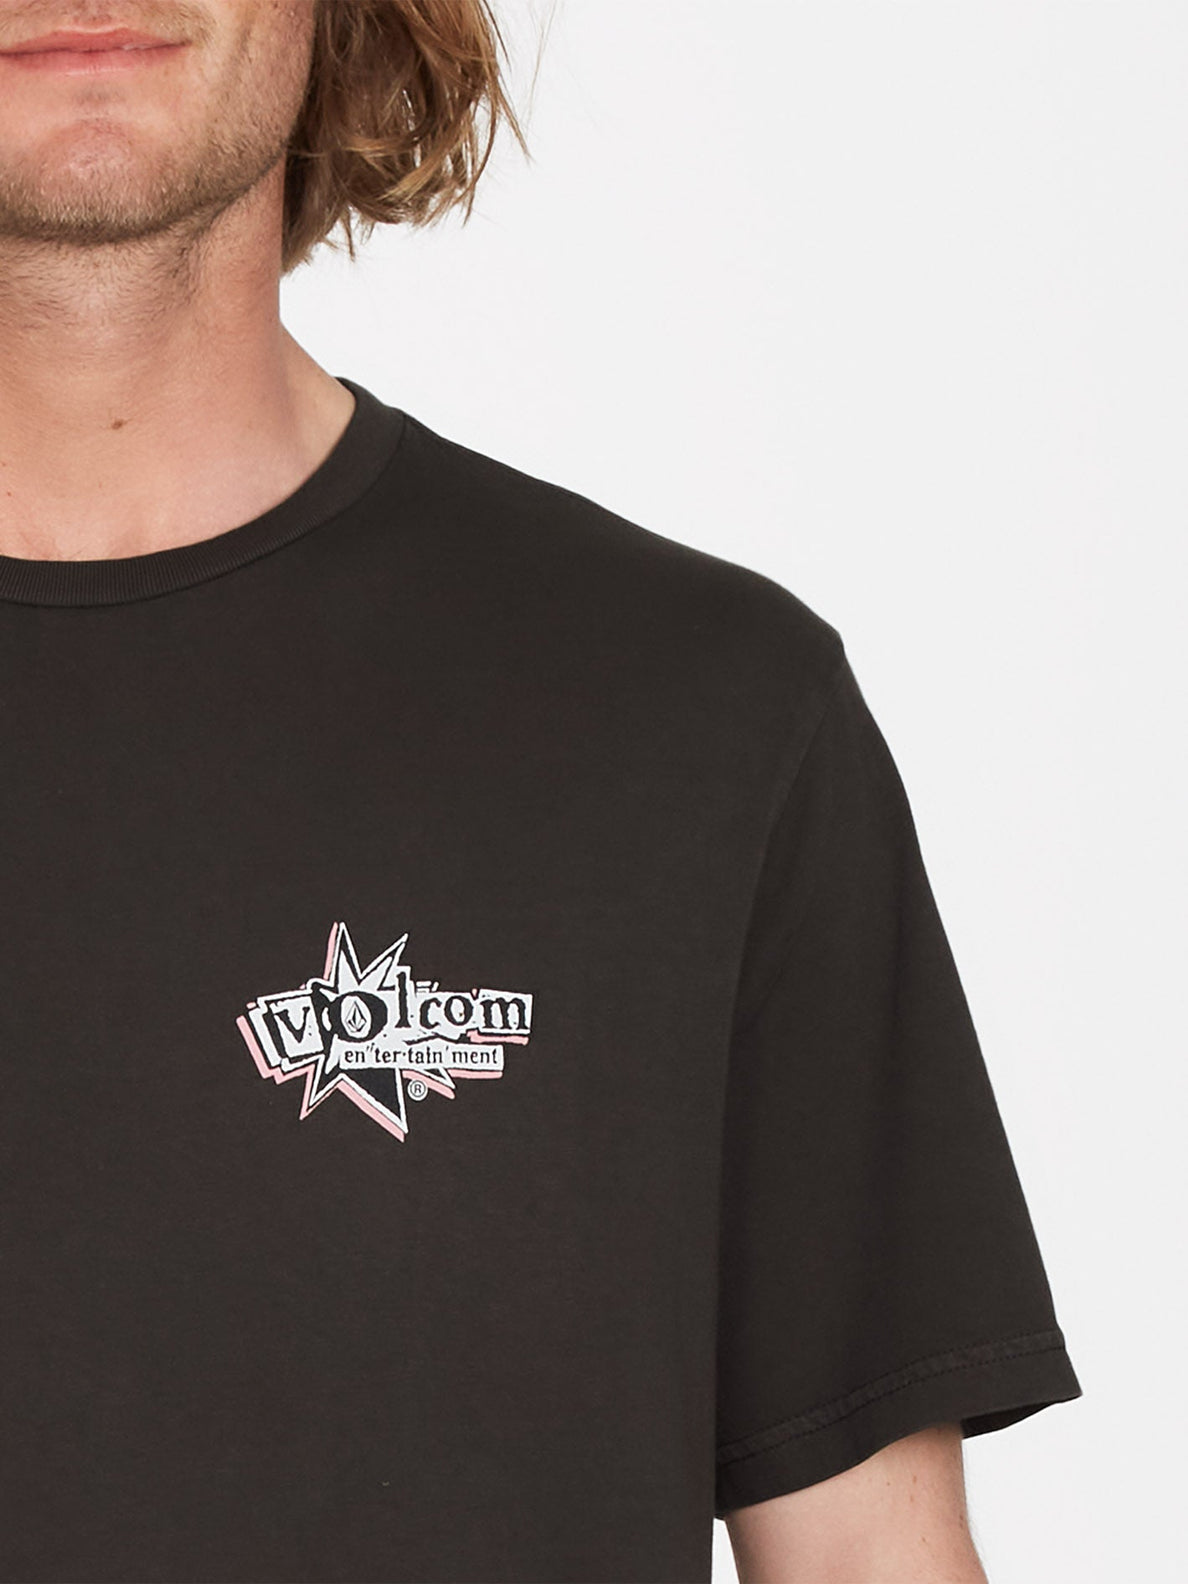 Camiseta Volcom V Entertainment - Rinsed Black | Camisetas de hombre | Camisetas manga corta de hombre | Volcom Shop | surfdevils.com